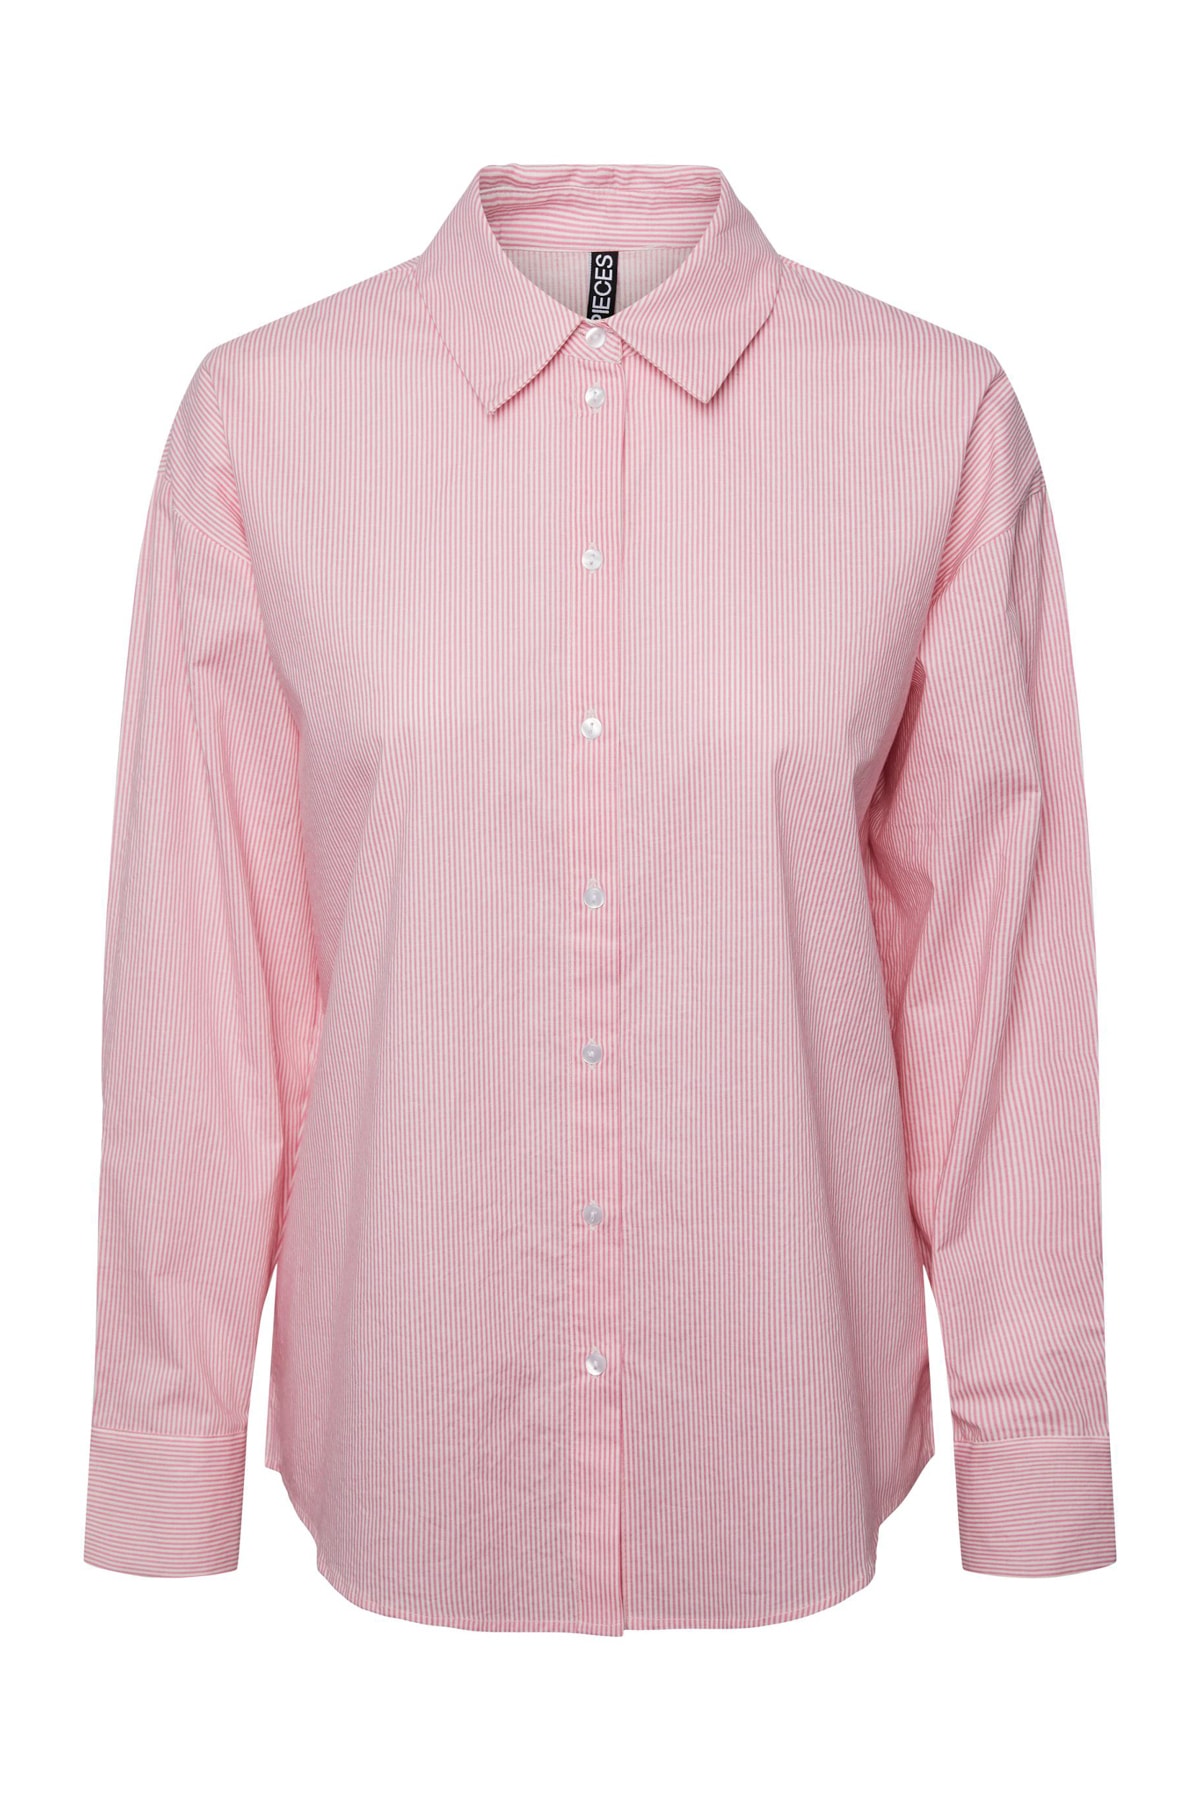 PIECES Hemd Rosa Regular Fit Fast ausverkauft